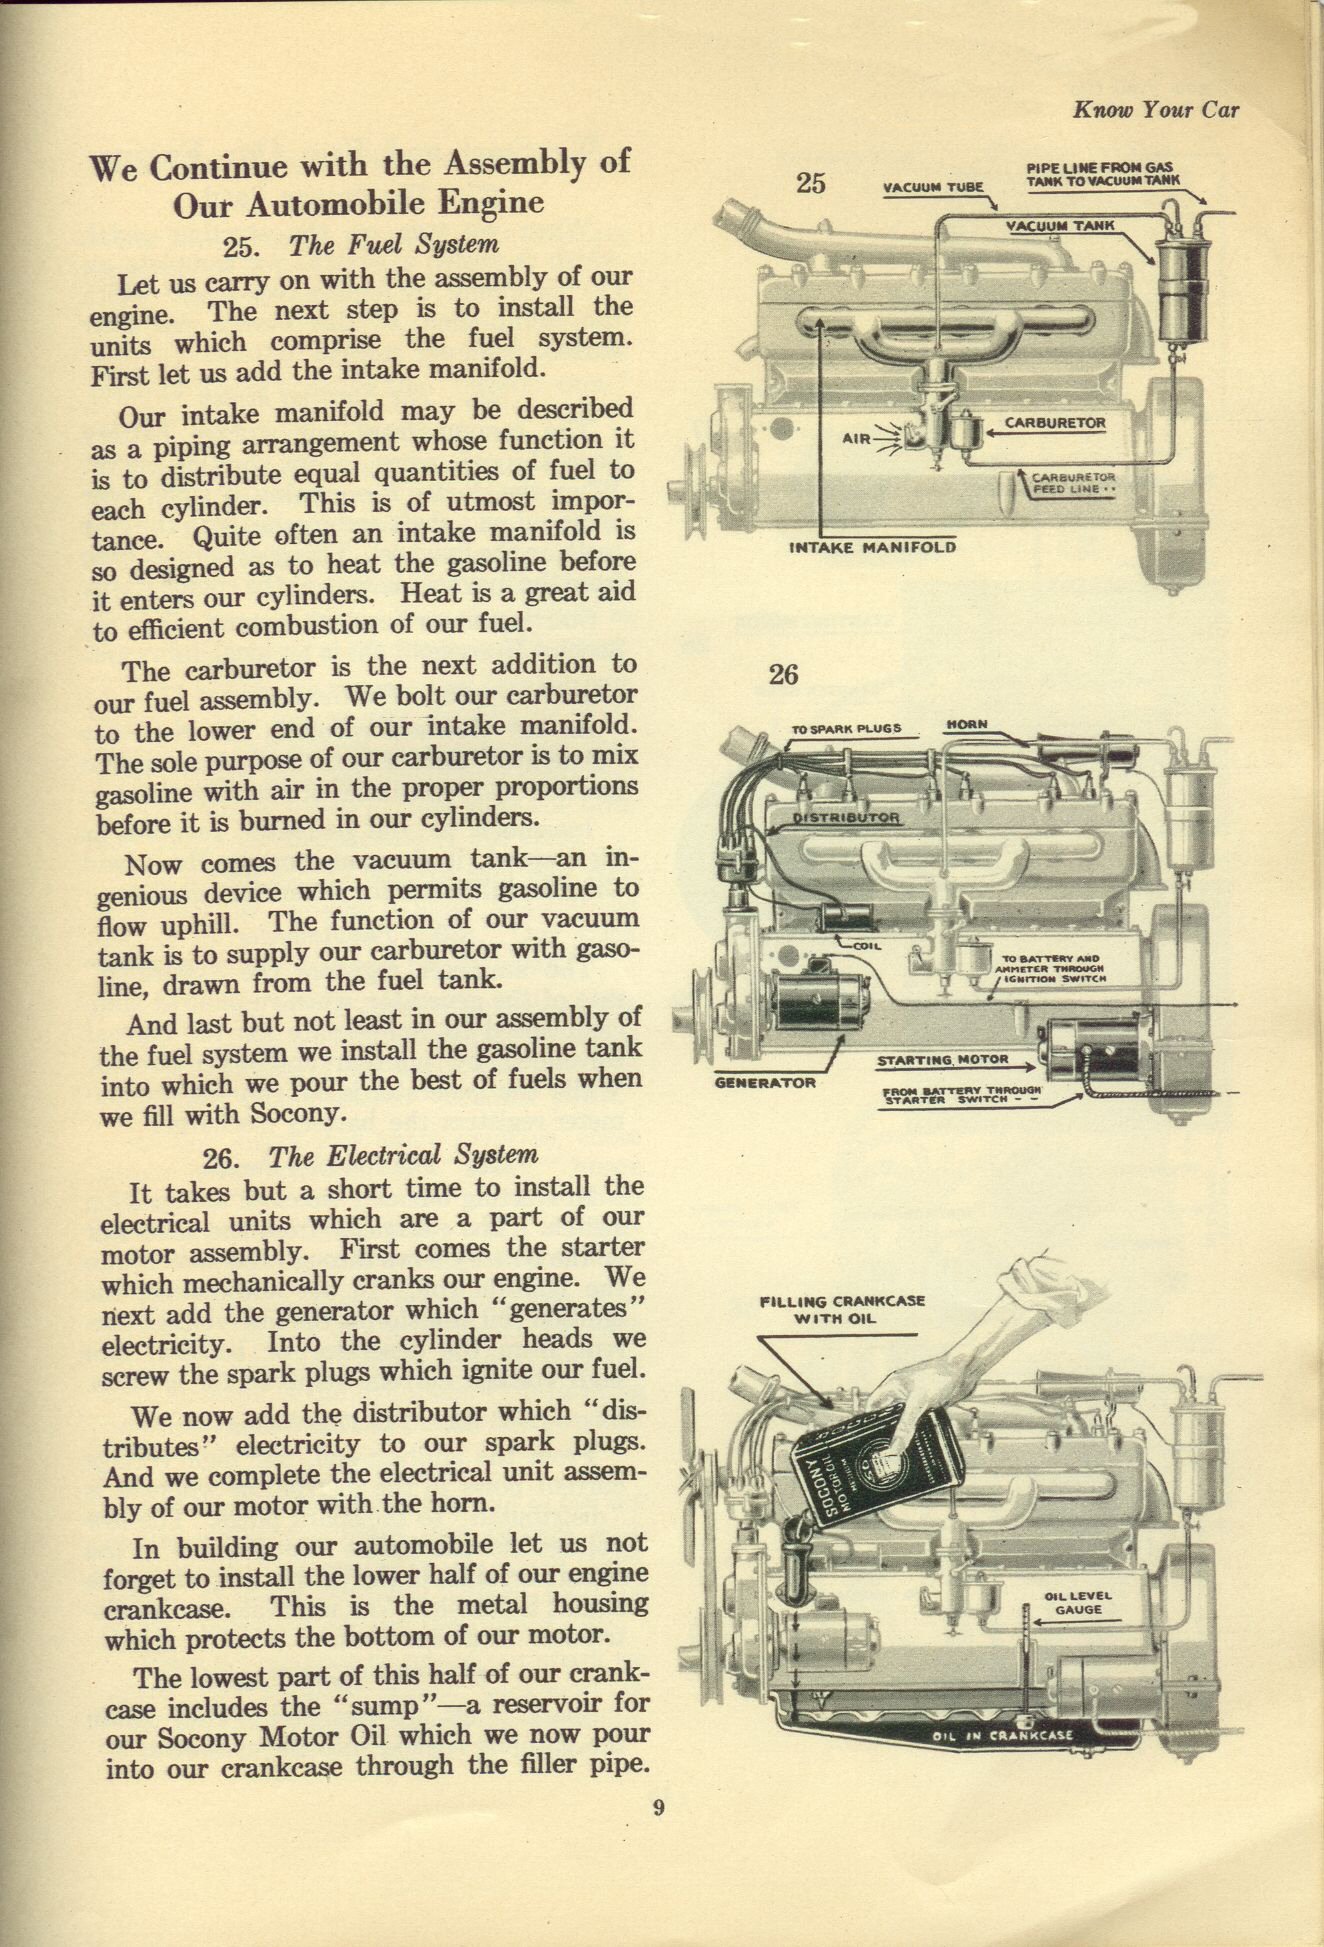 1928 Know Your Car Handbook Page 28